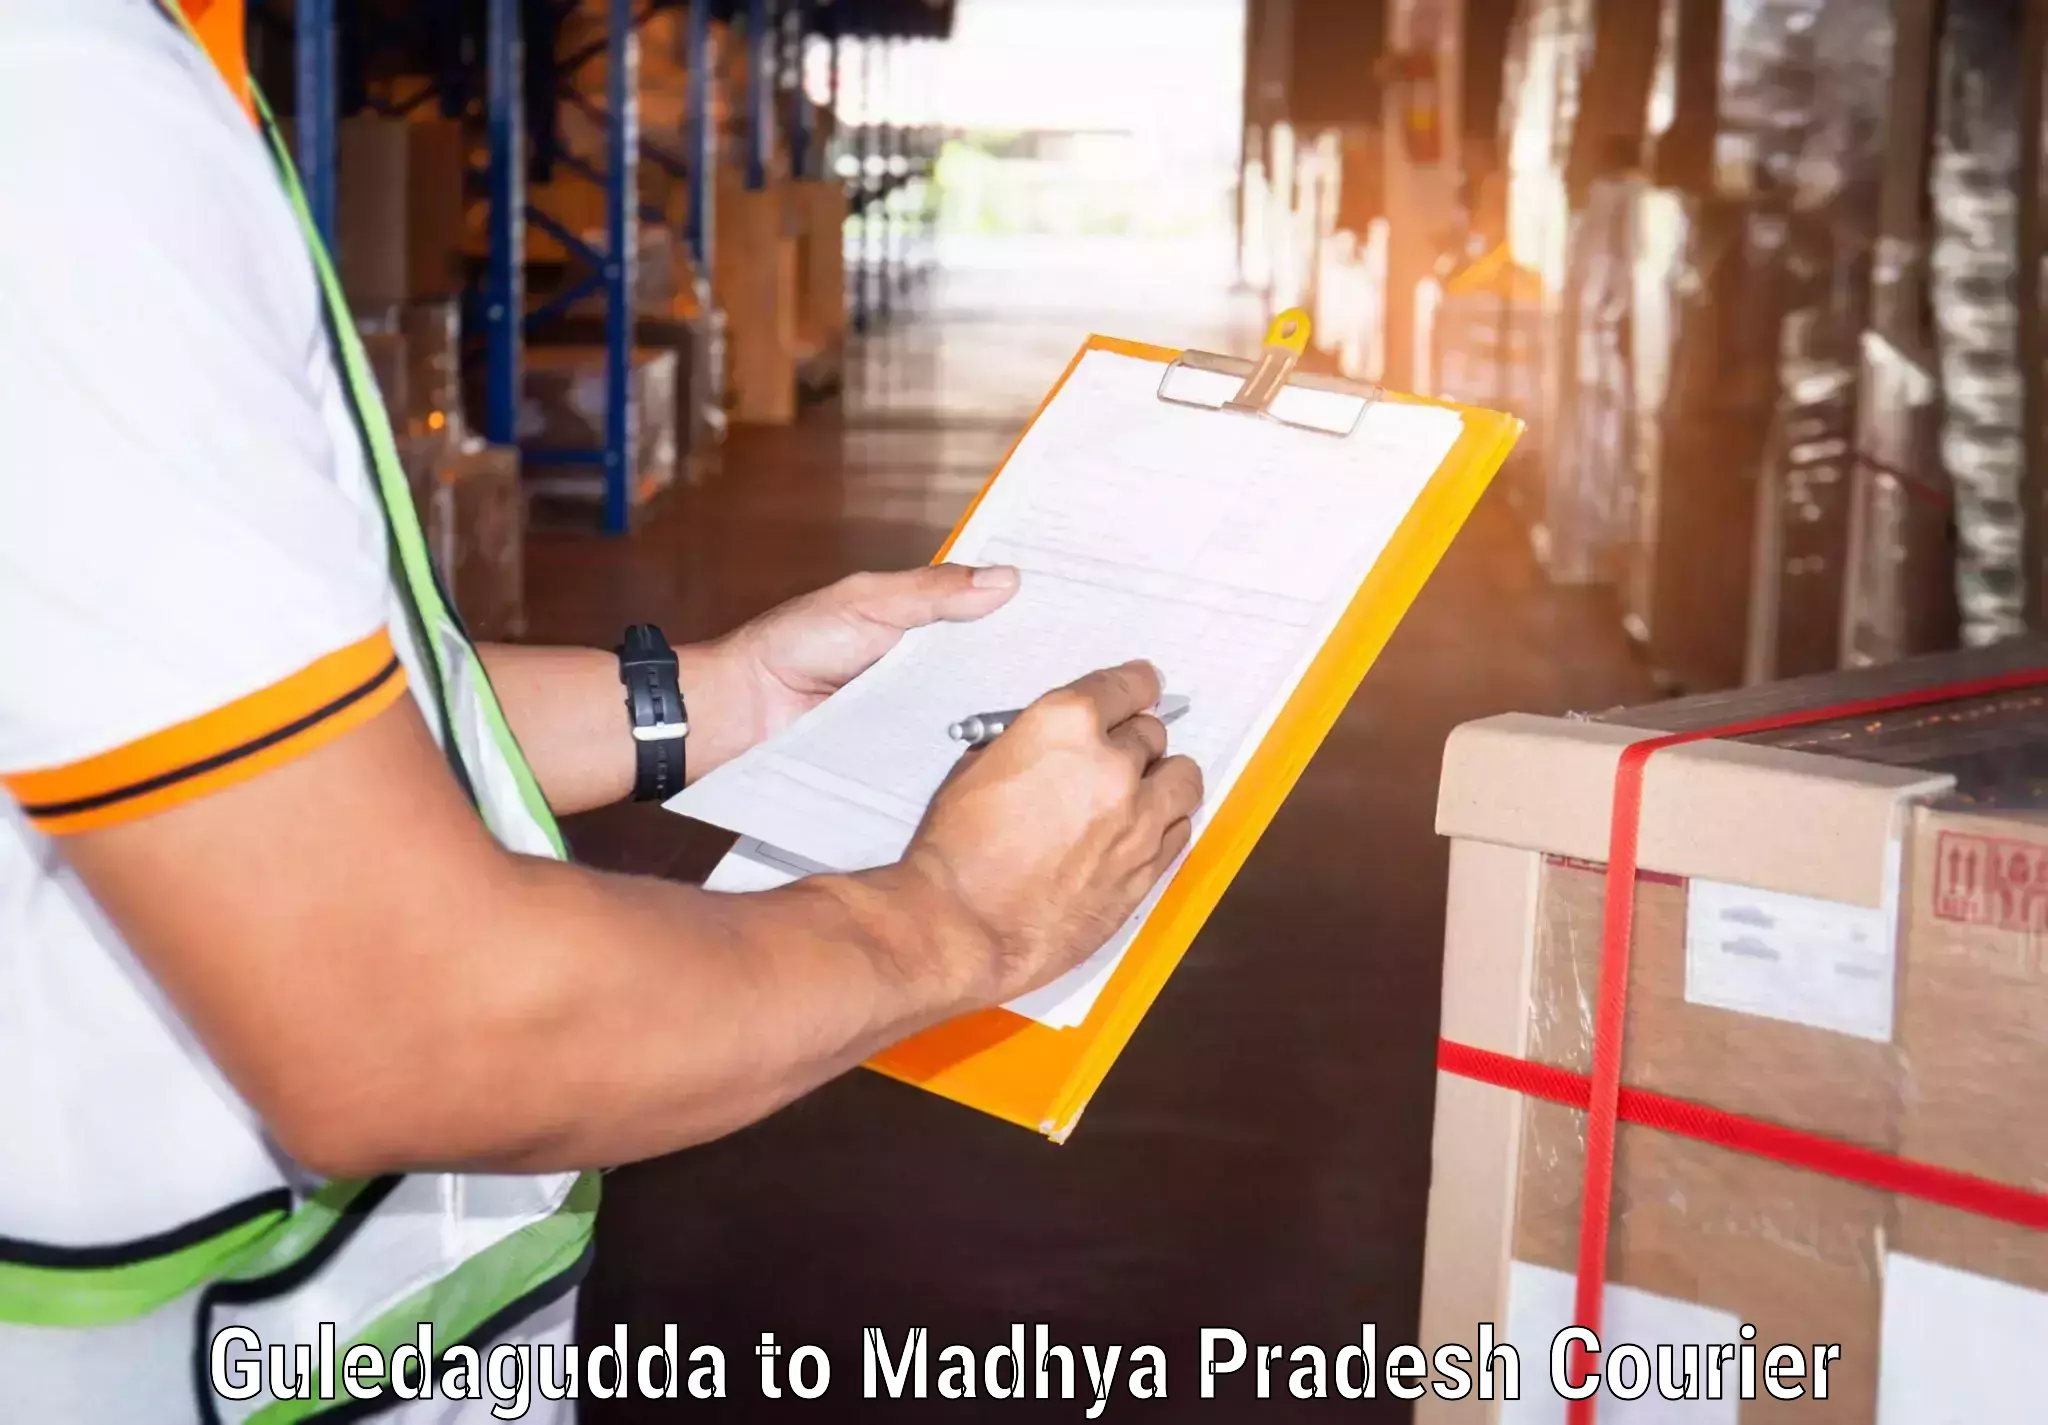 Courier service booking Guledagudda to Ashoknagar